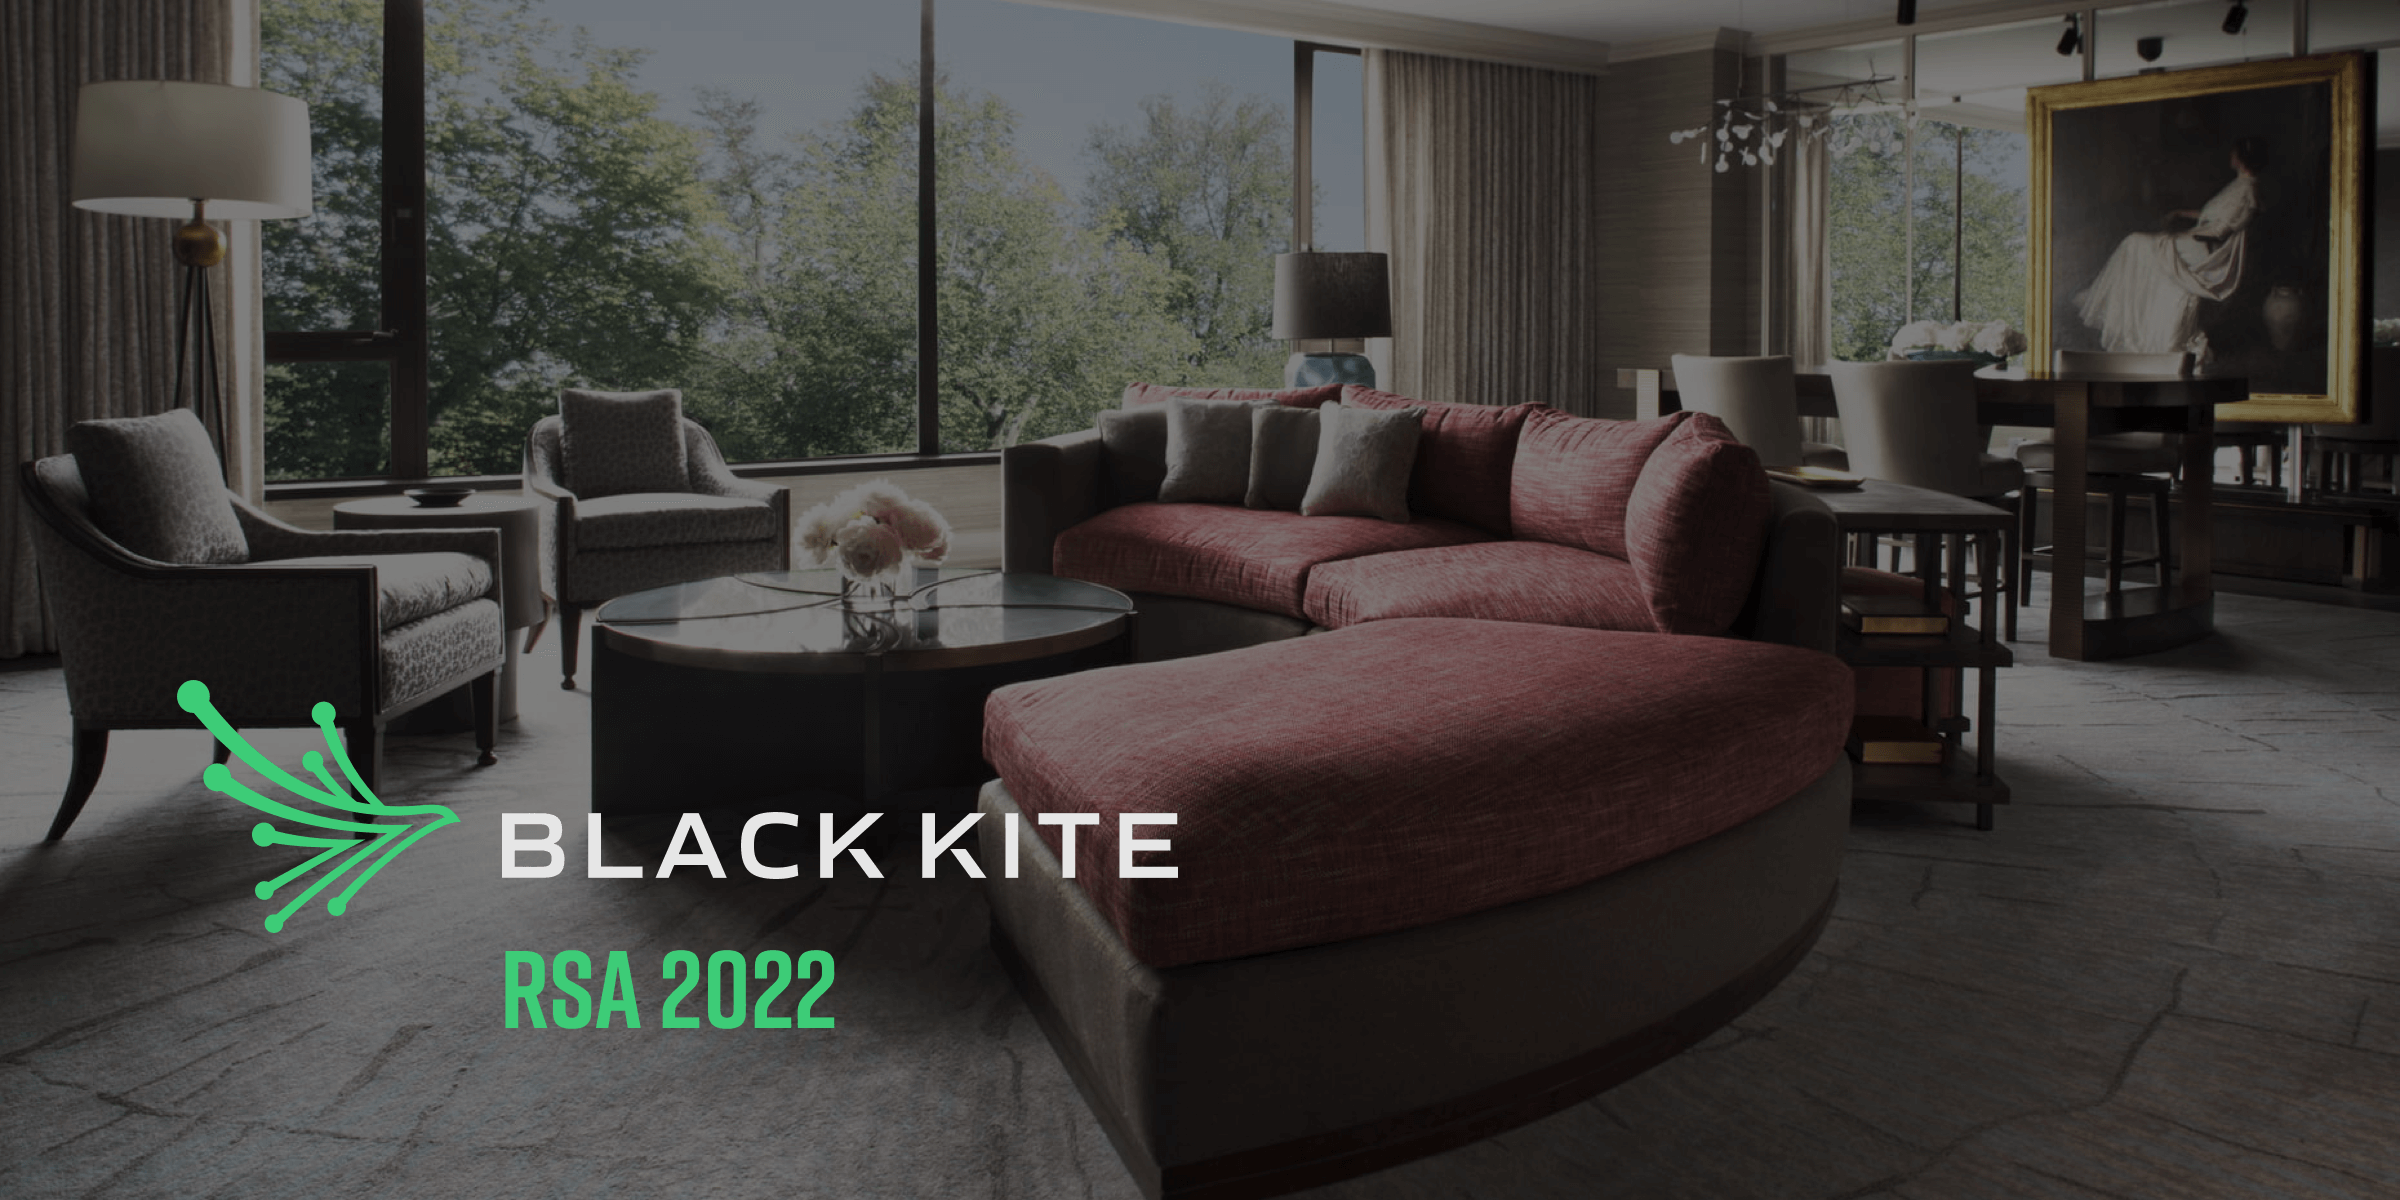 black kite event rsa 2022